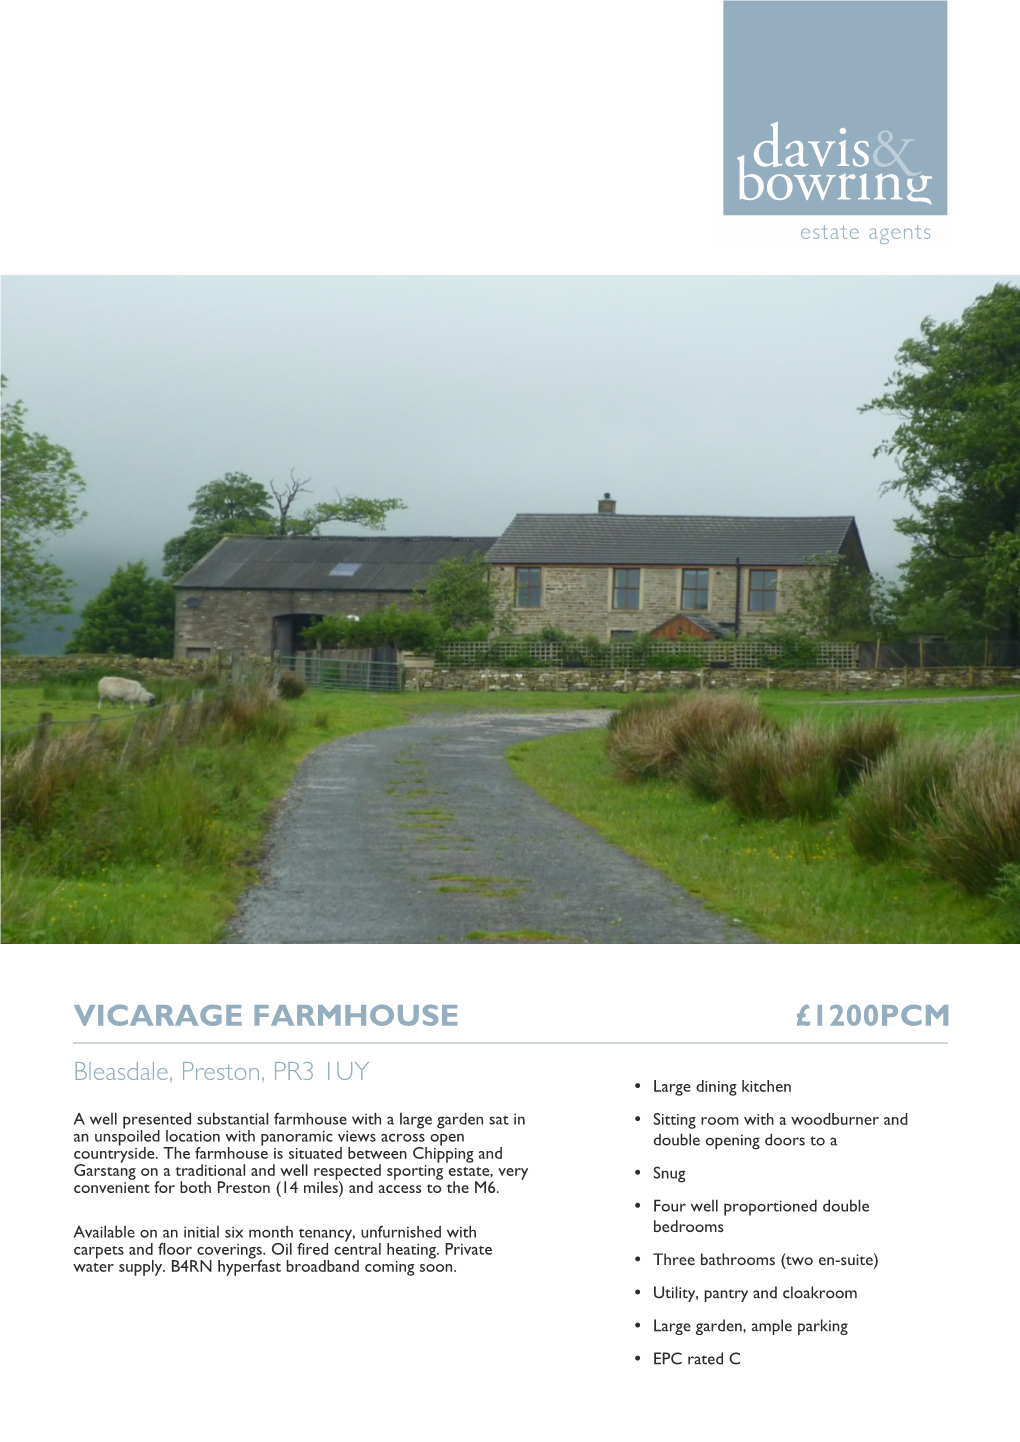 Vicarage Farmhouse